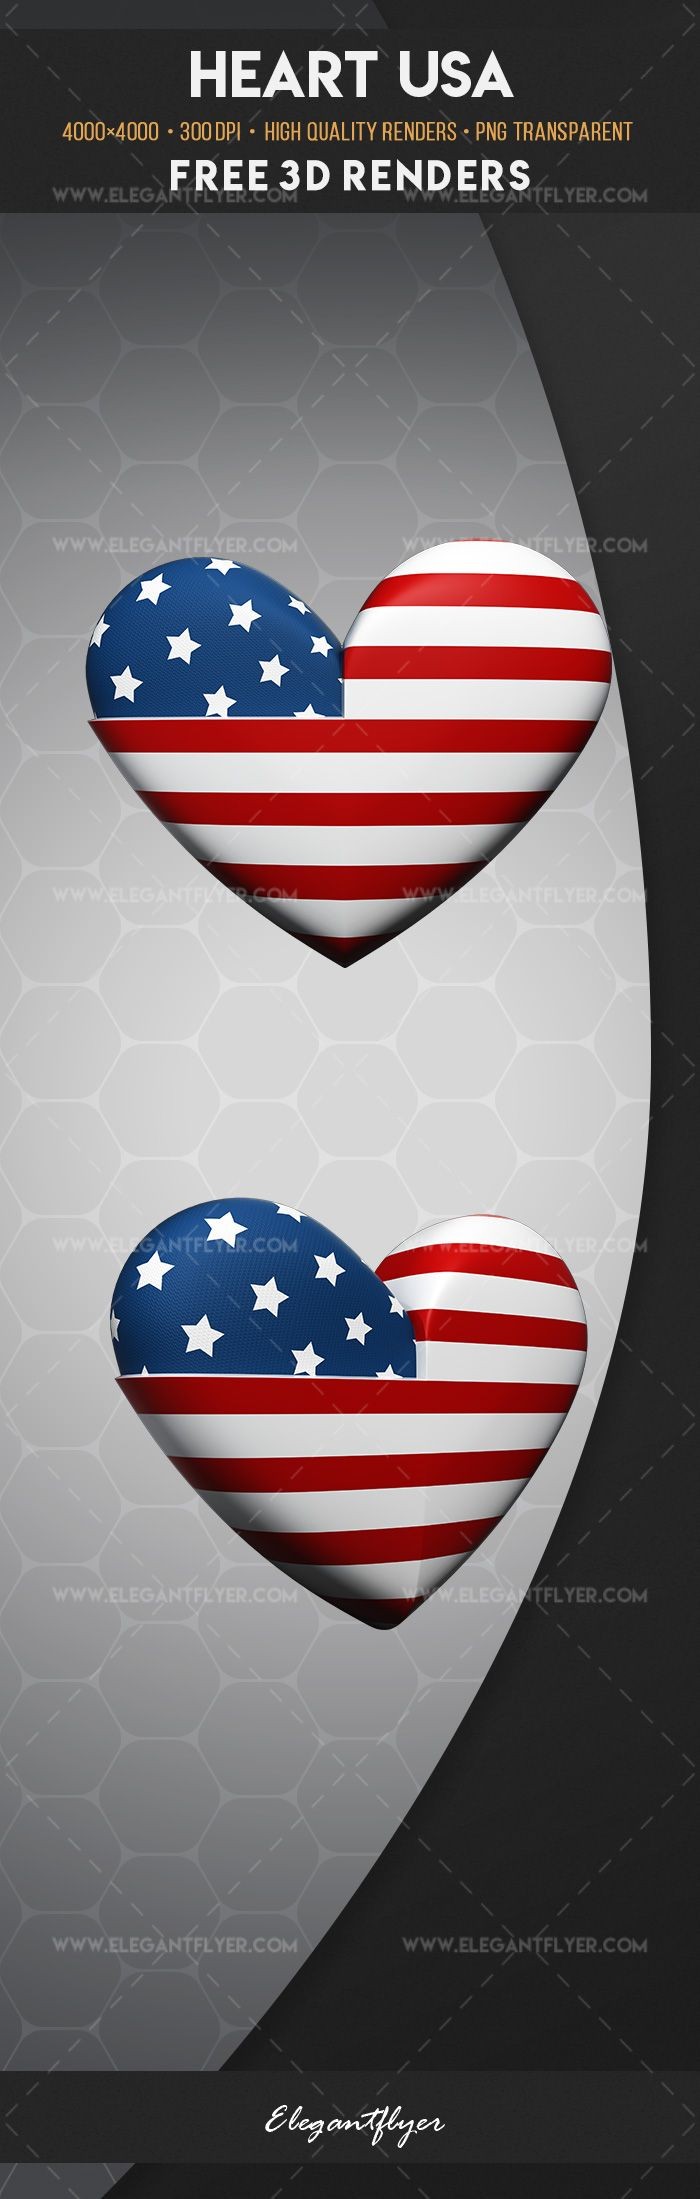 Heart USA by ElegantFlyer